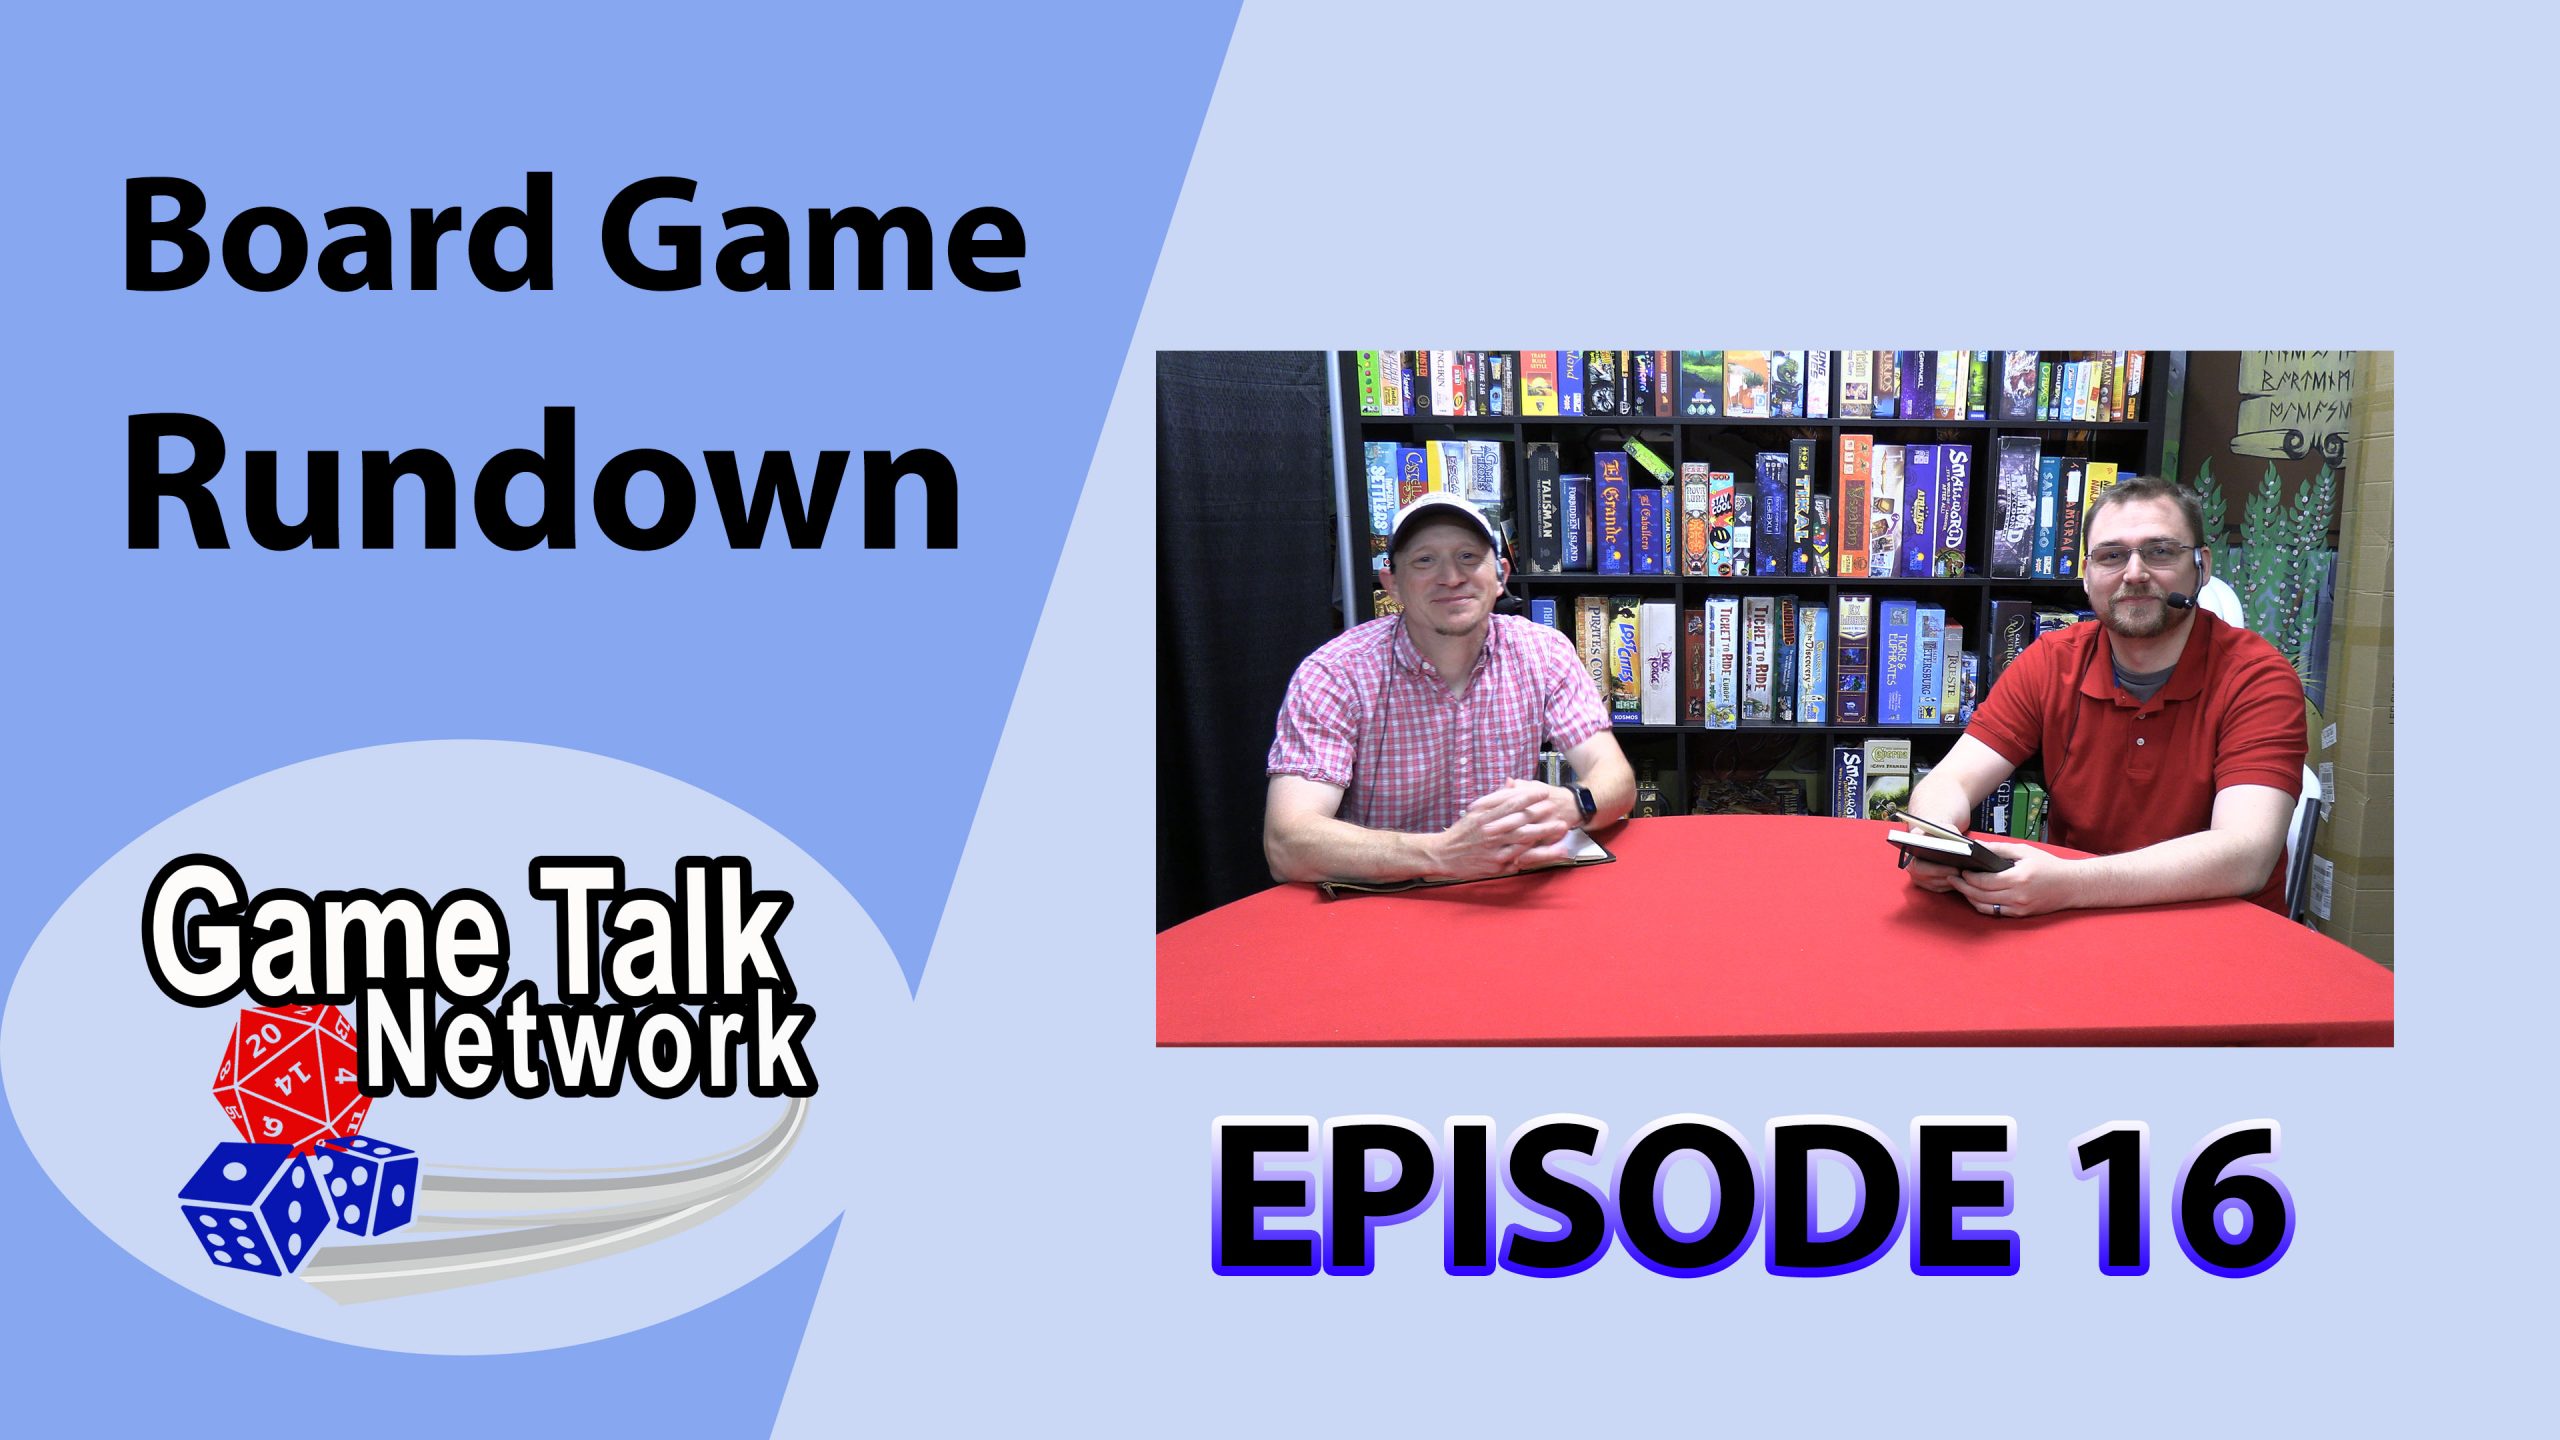 Board Game Rundown Episode 16